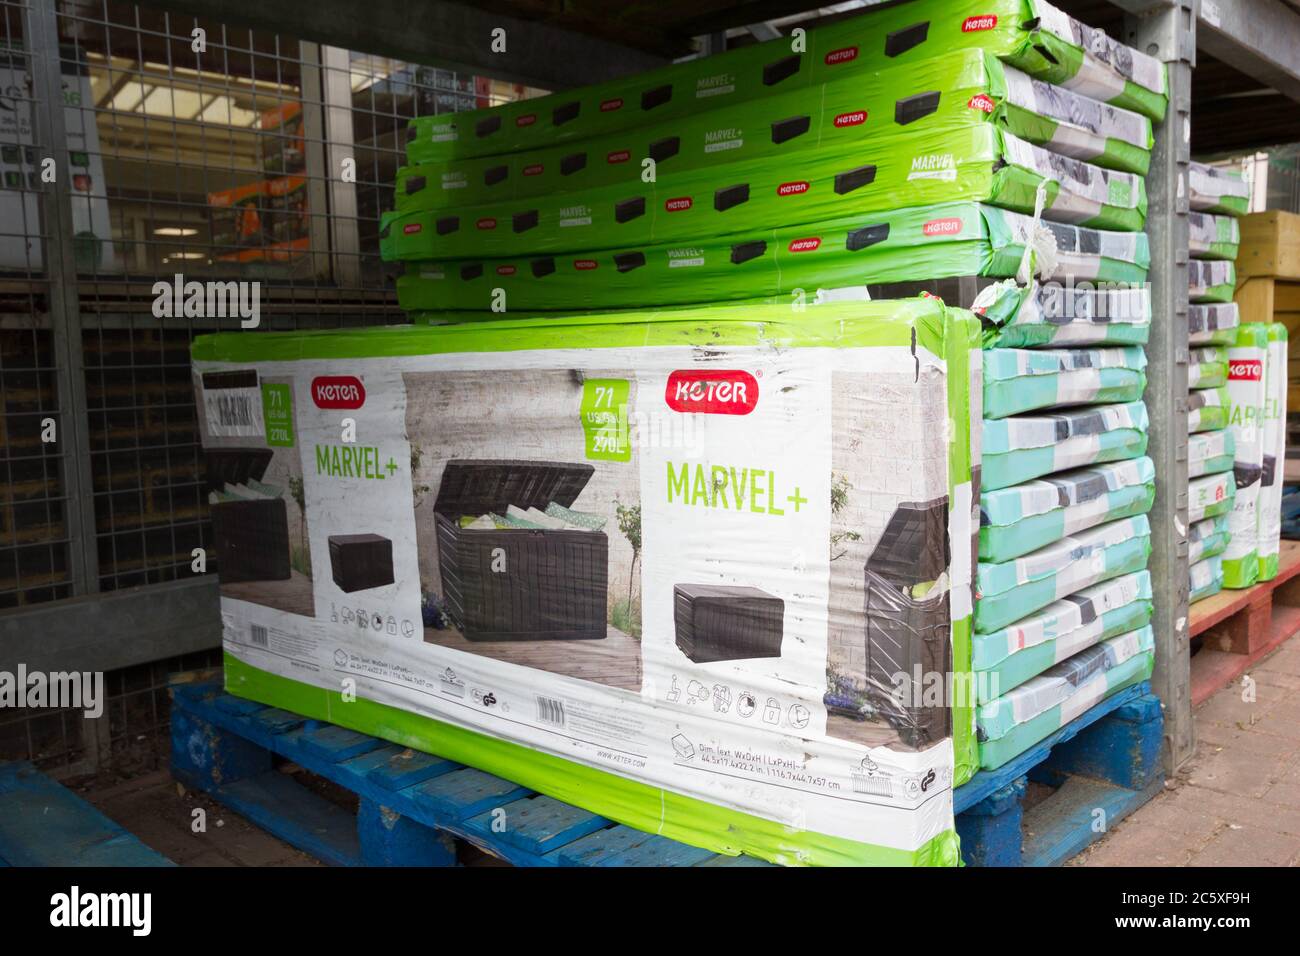 Keter Marvel Plus 270L Plastic Garden Storage Box Stock Photo